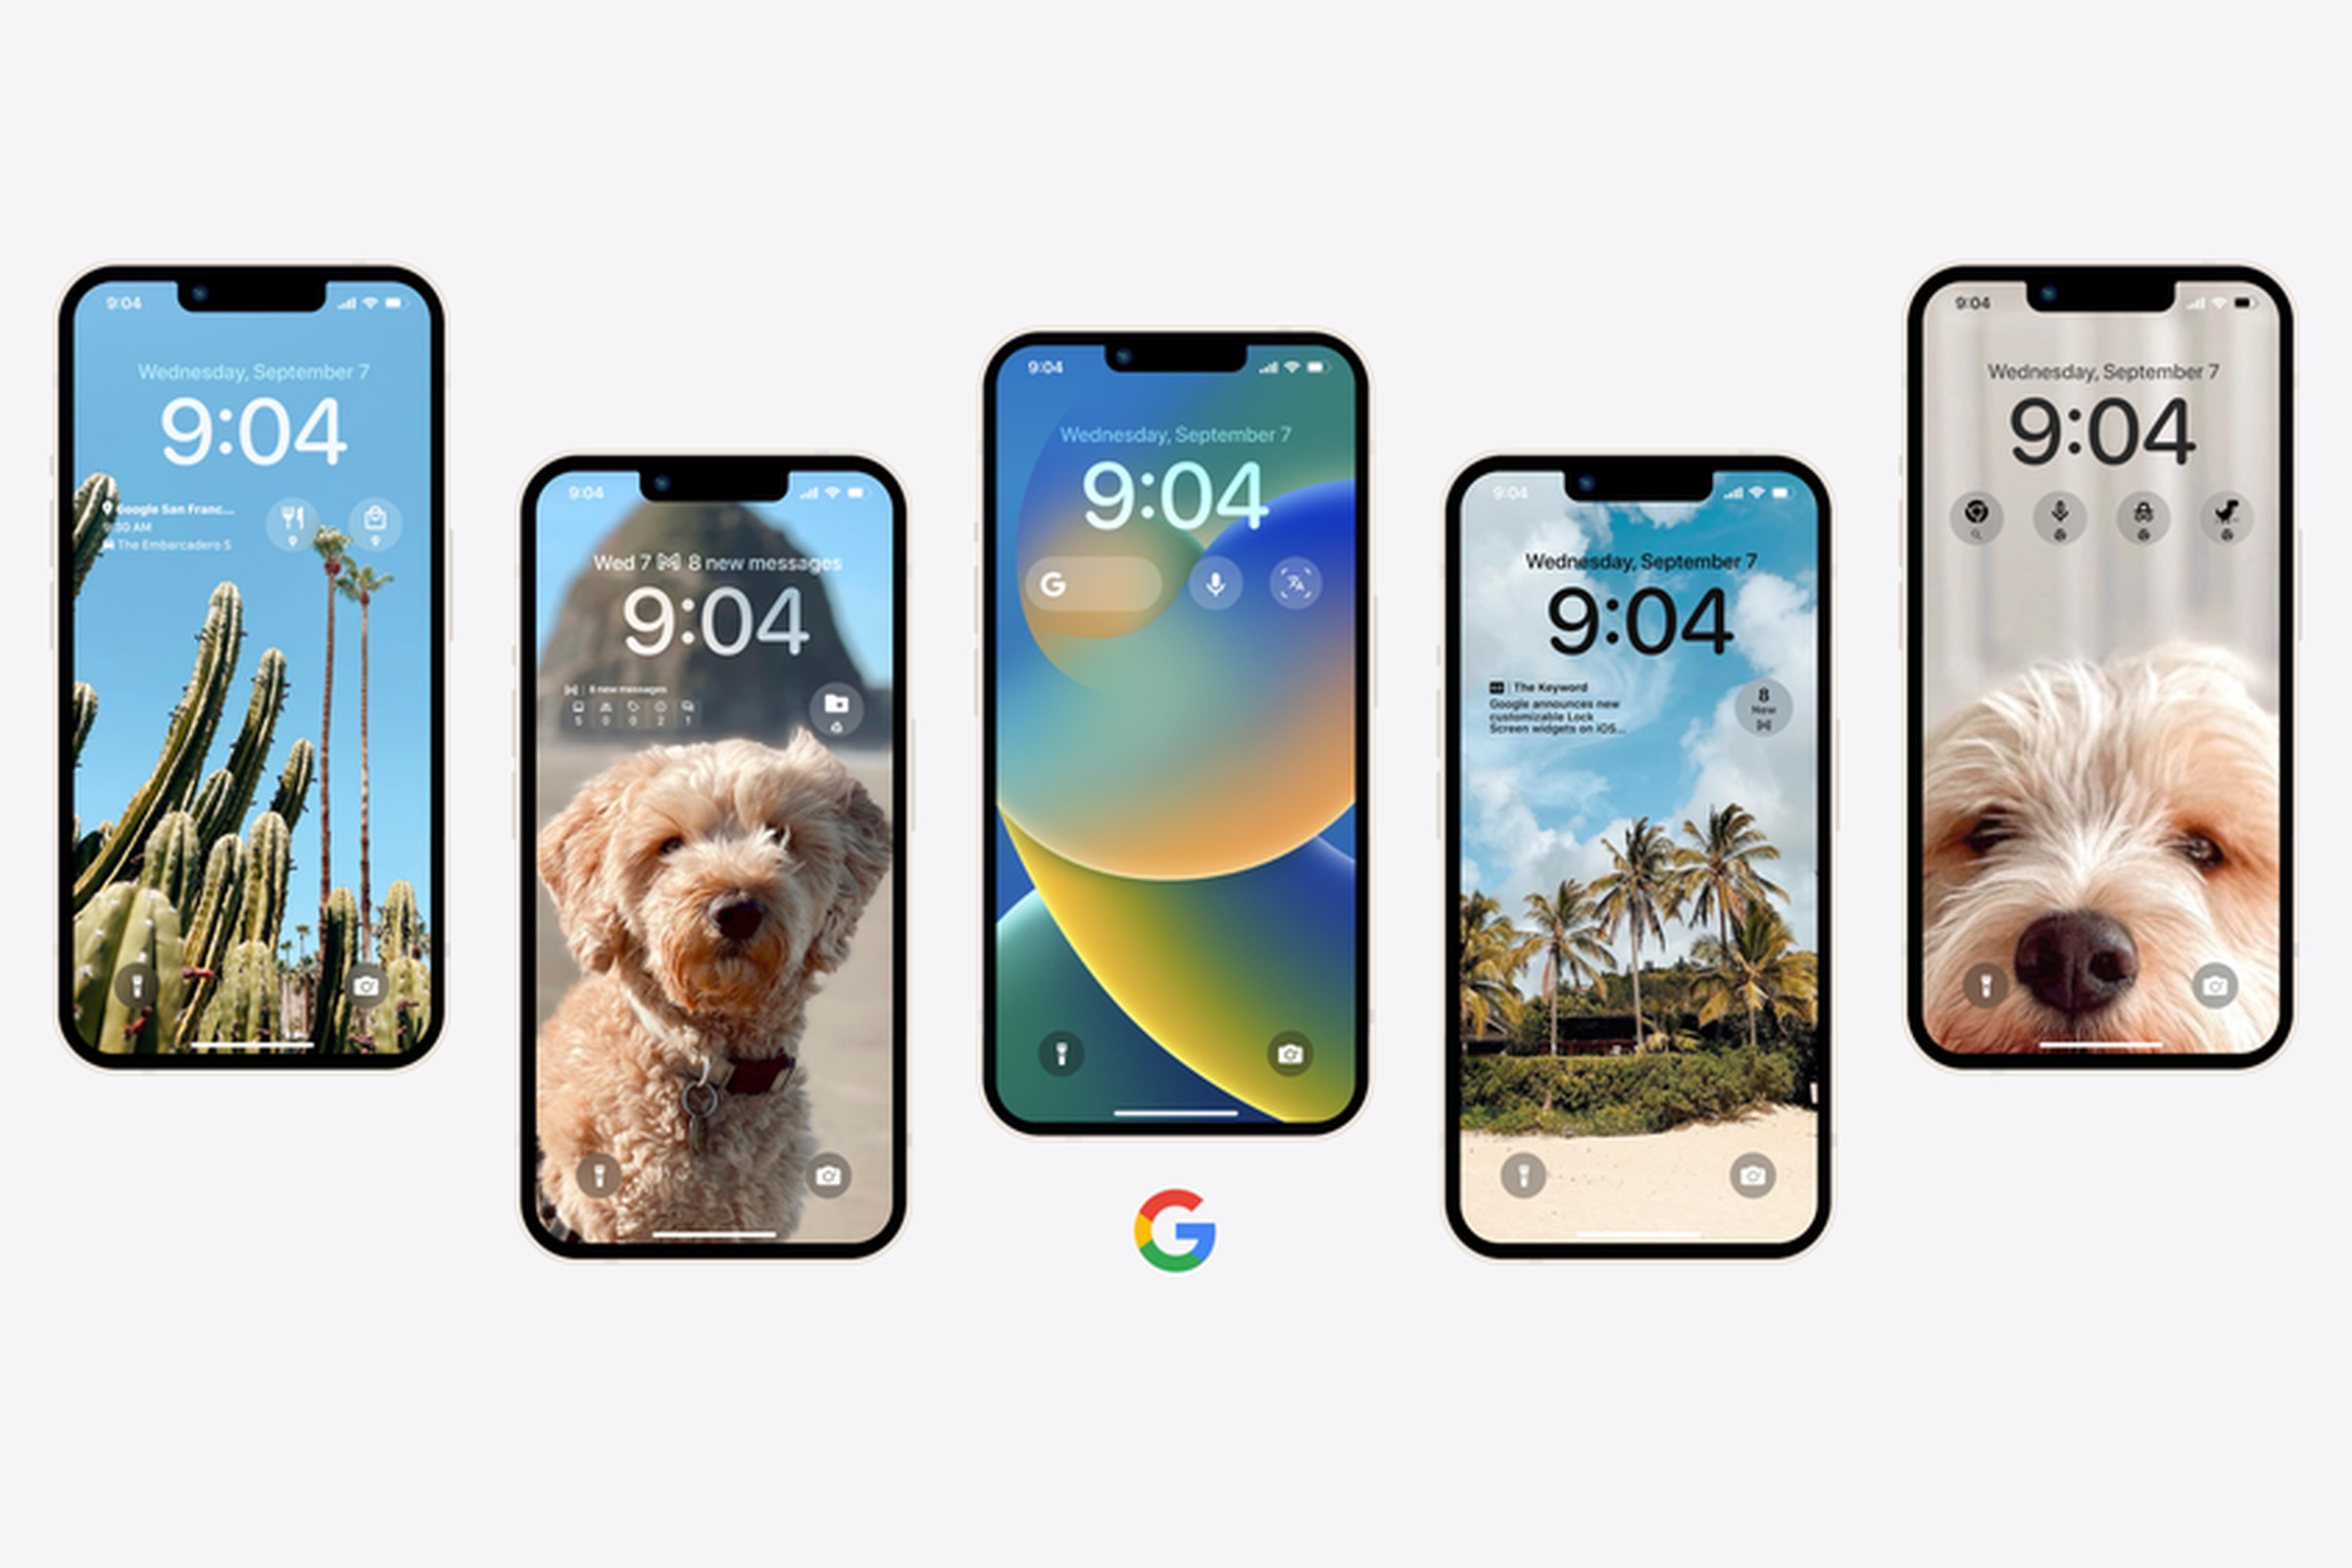 Multiple iPhone lock screens with Google app widgets.